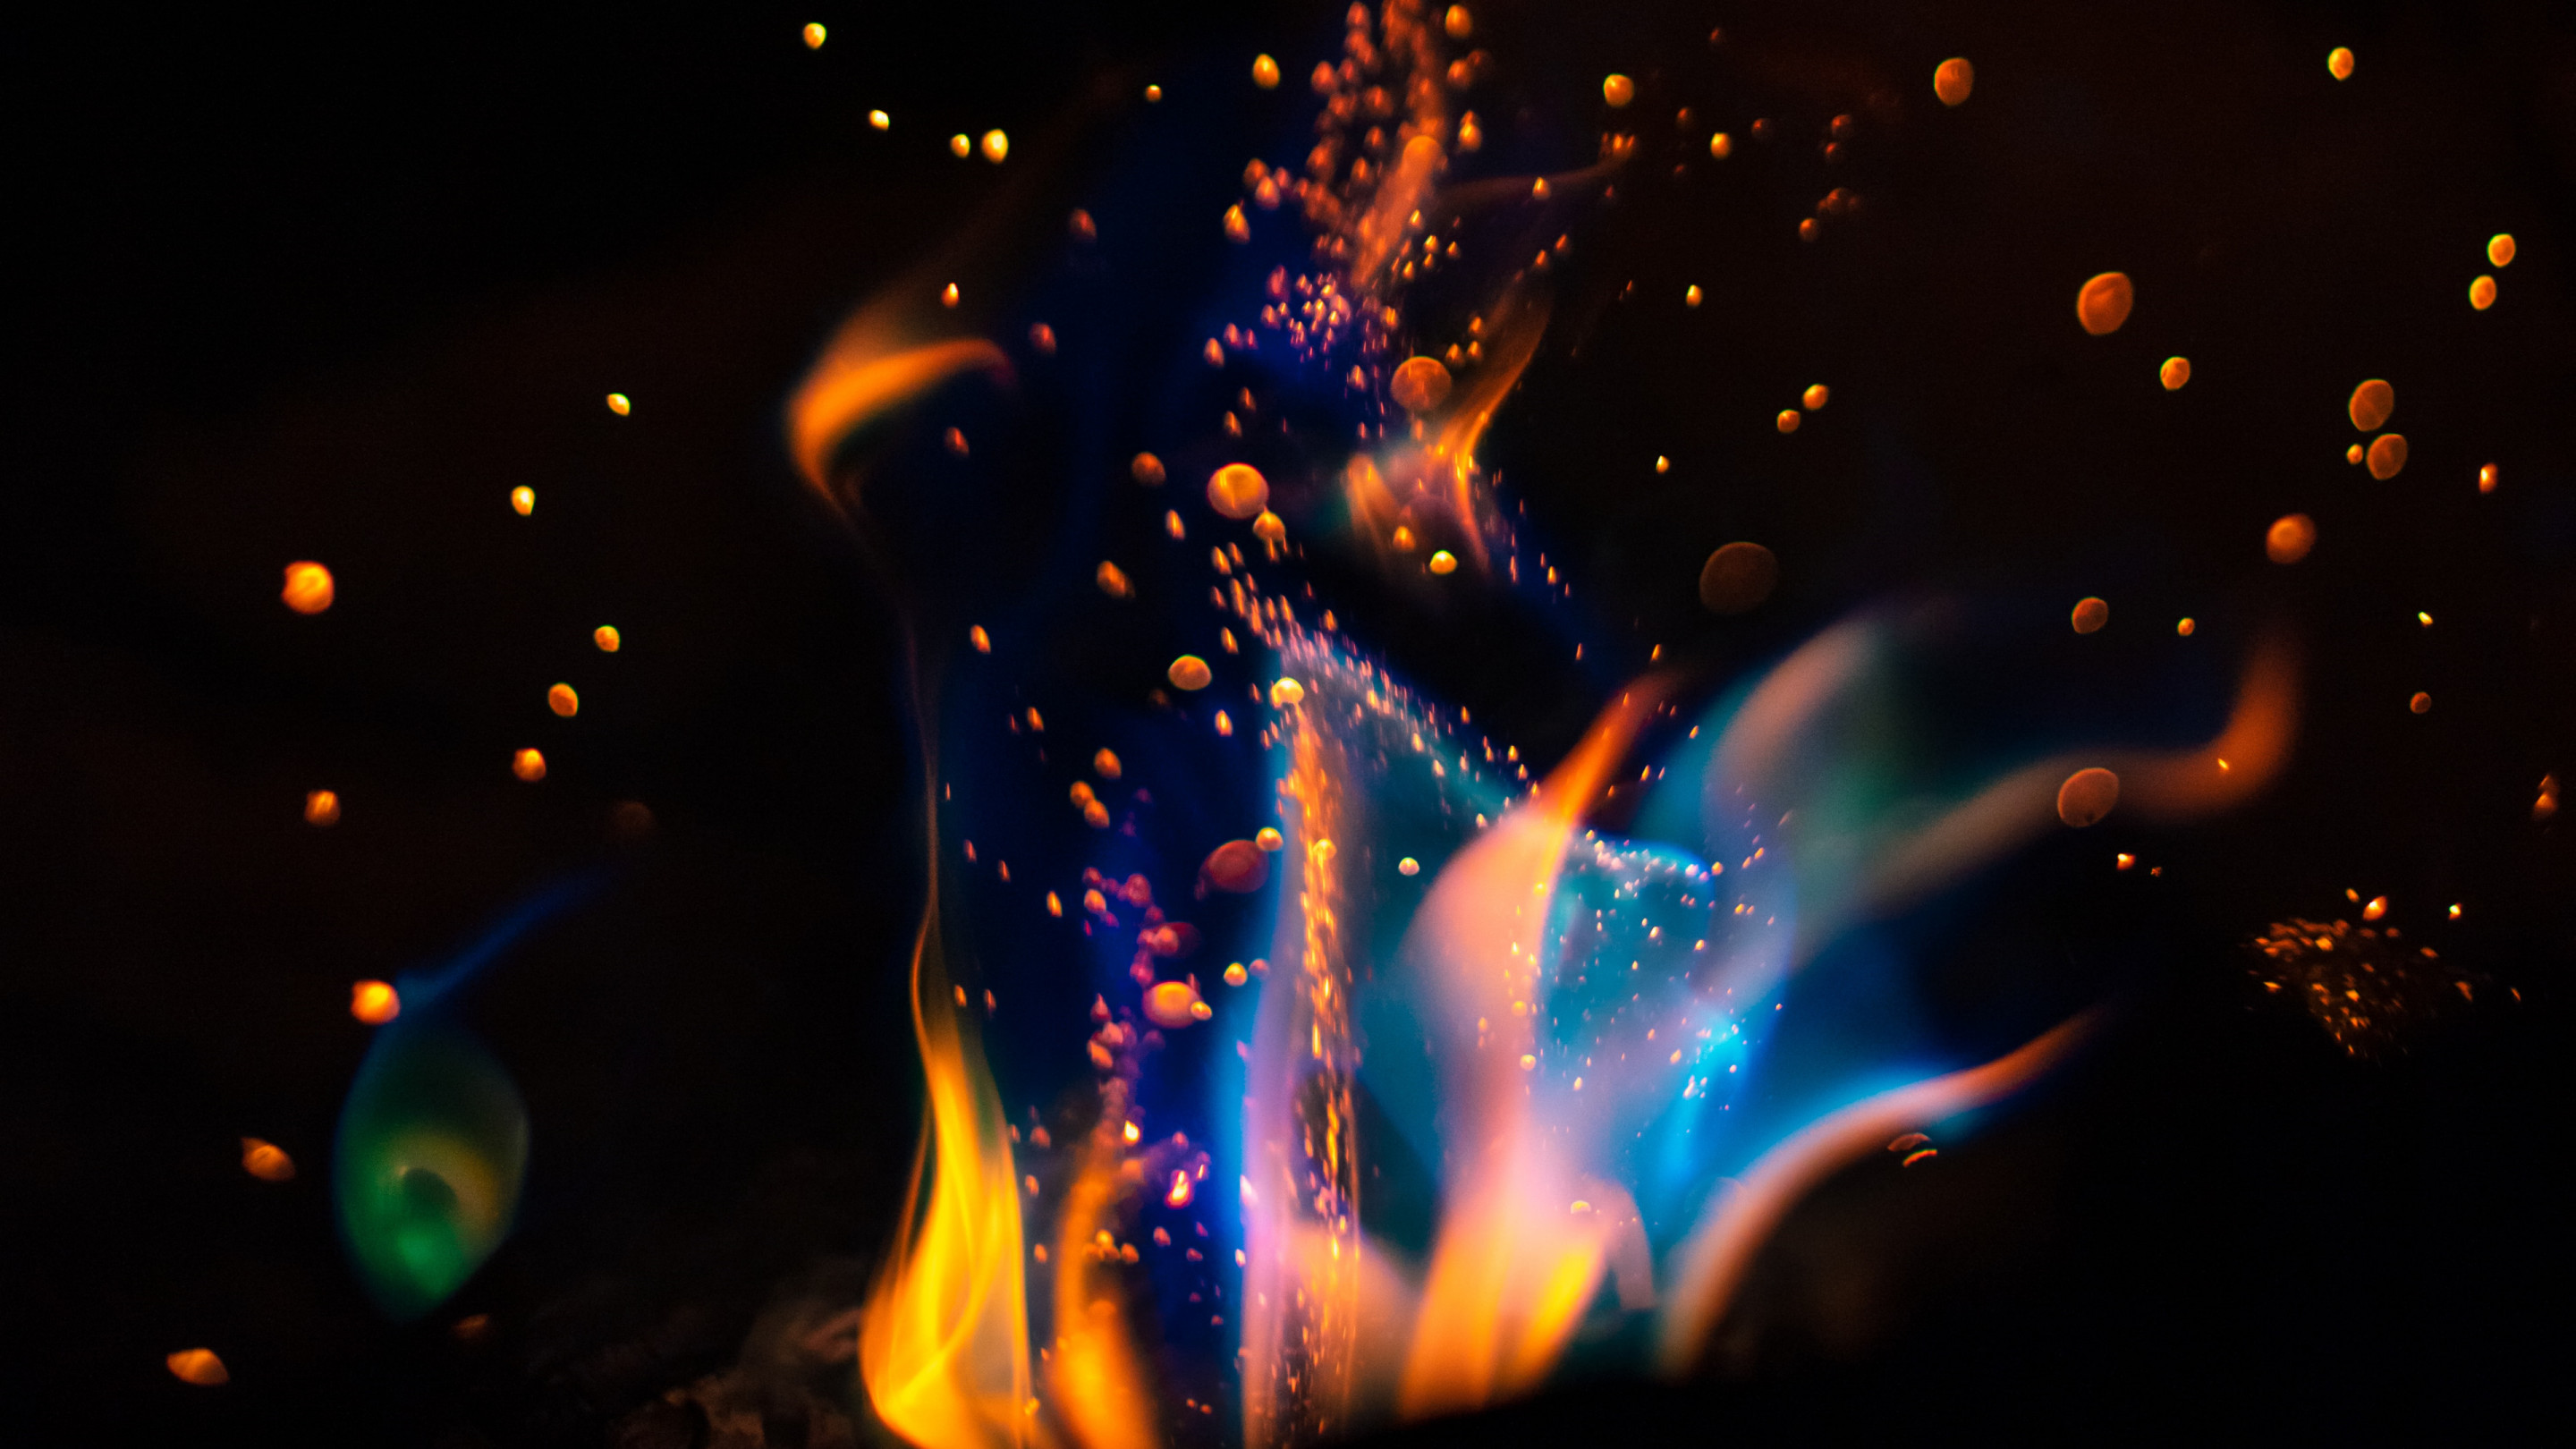 Hot flames in darkness wallpaper 2880x1620